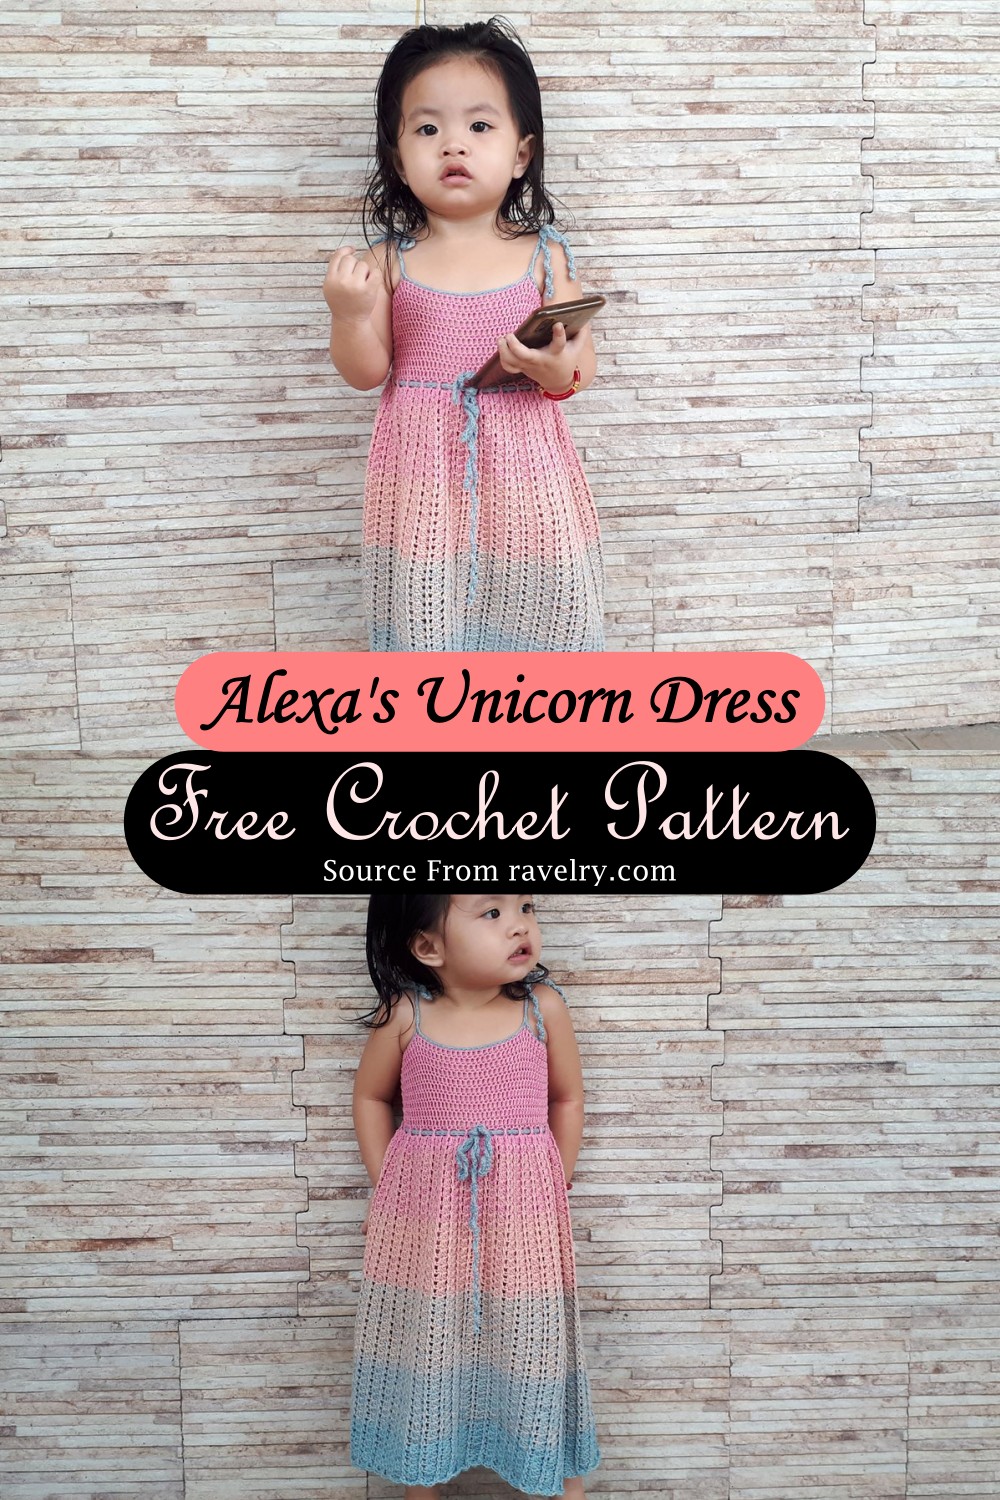 Alexa's Unicorn Dress